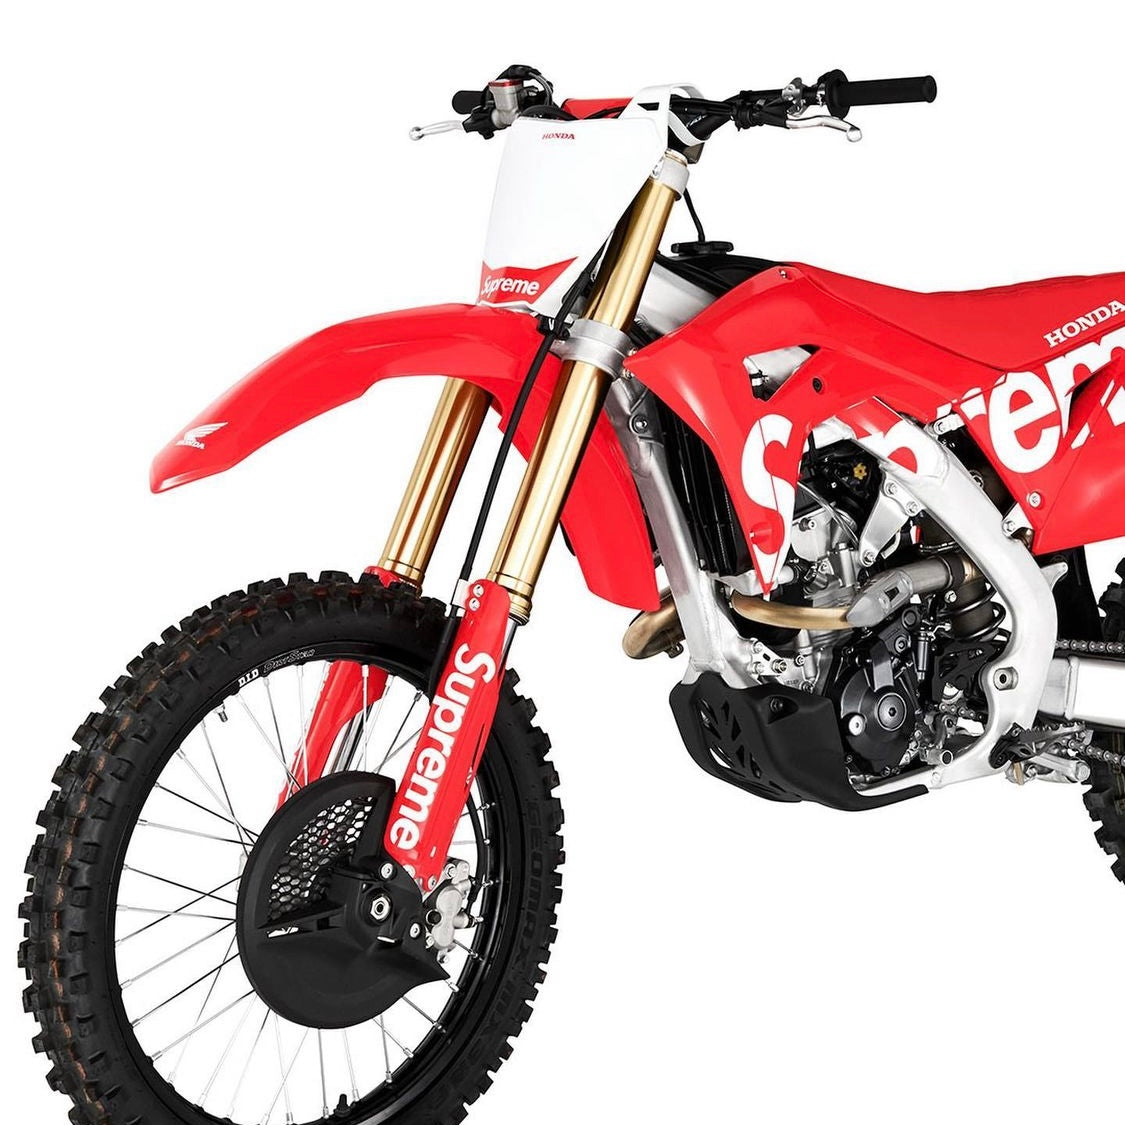 2020 Supreme x Honda CRF250R Dirtbike Motorcycle